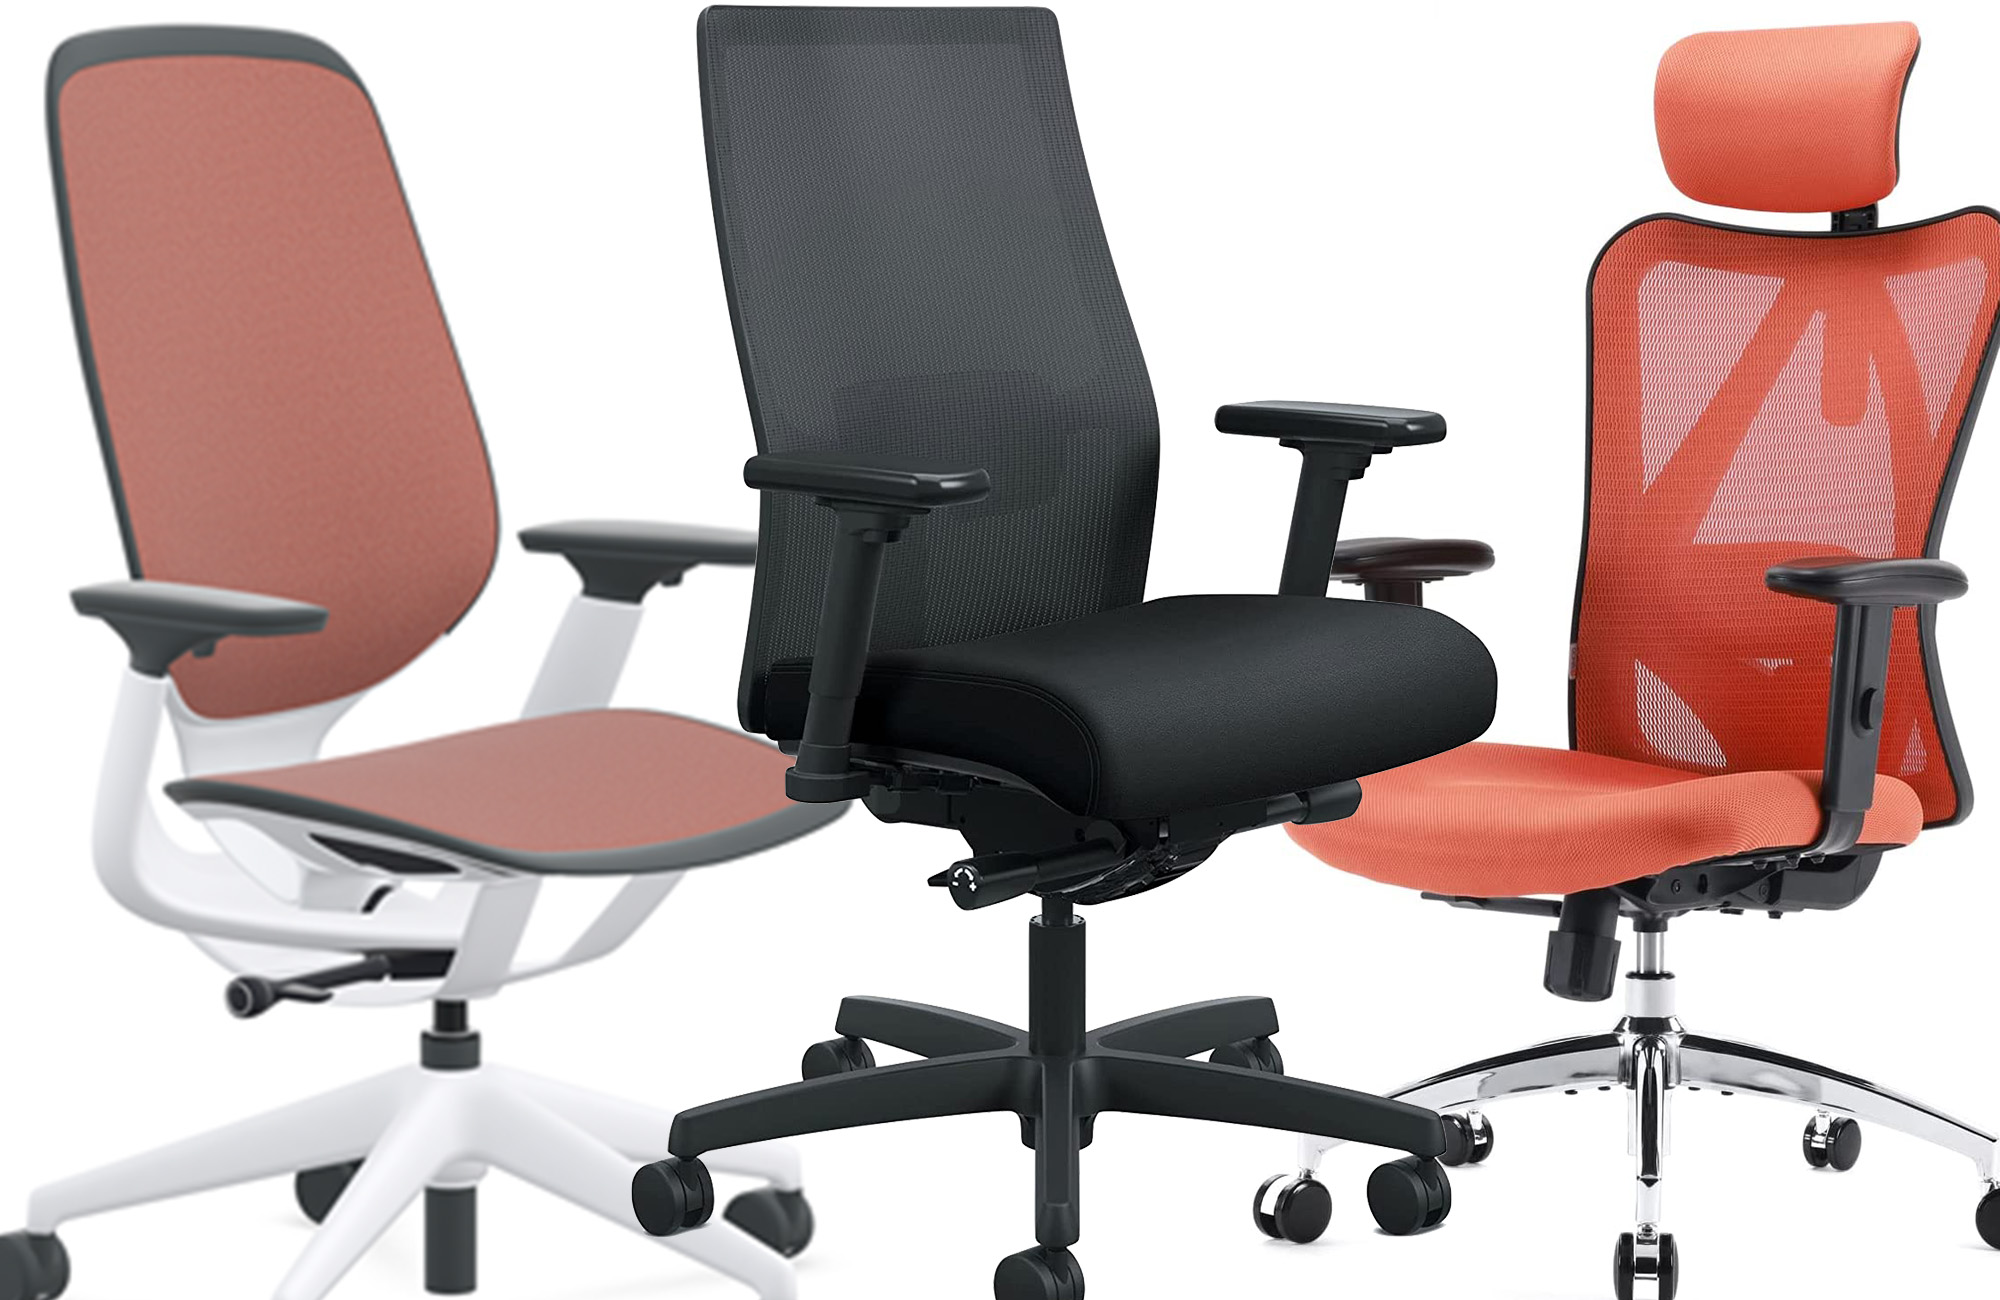 FREE DESK MAT* Sihoo M18 Ergonomic Fabric Office Chair with Legrest